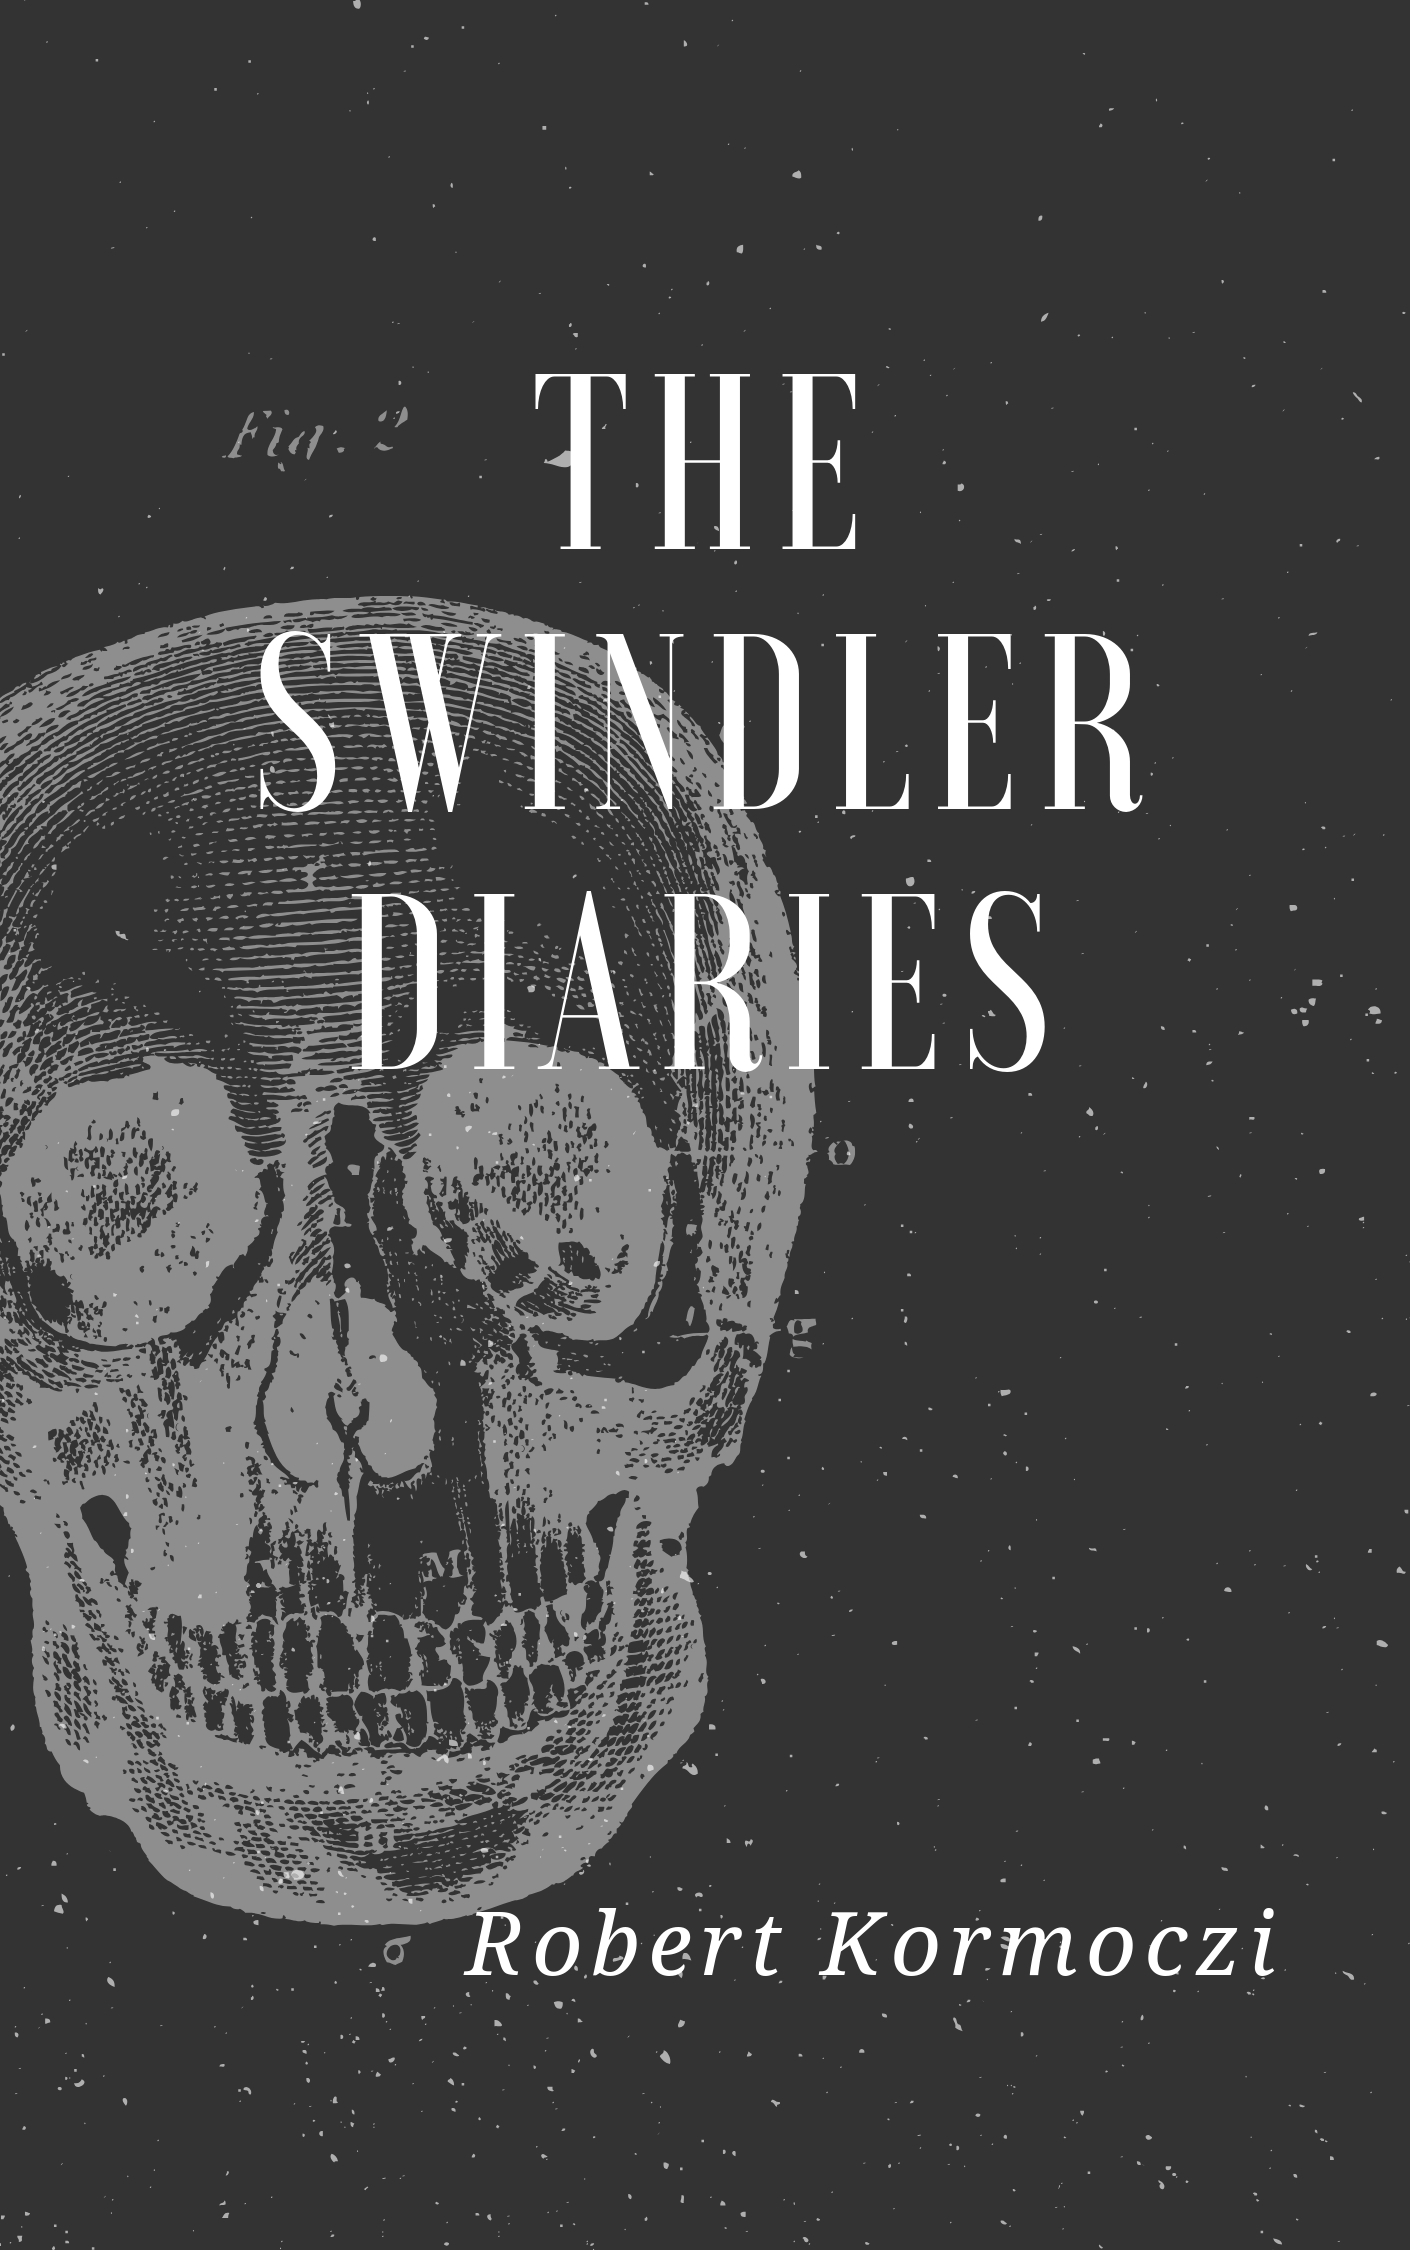 The Swindler Diaries - book author Robert